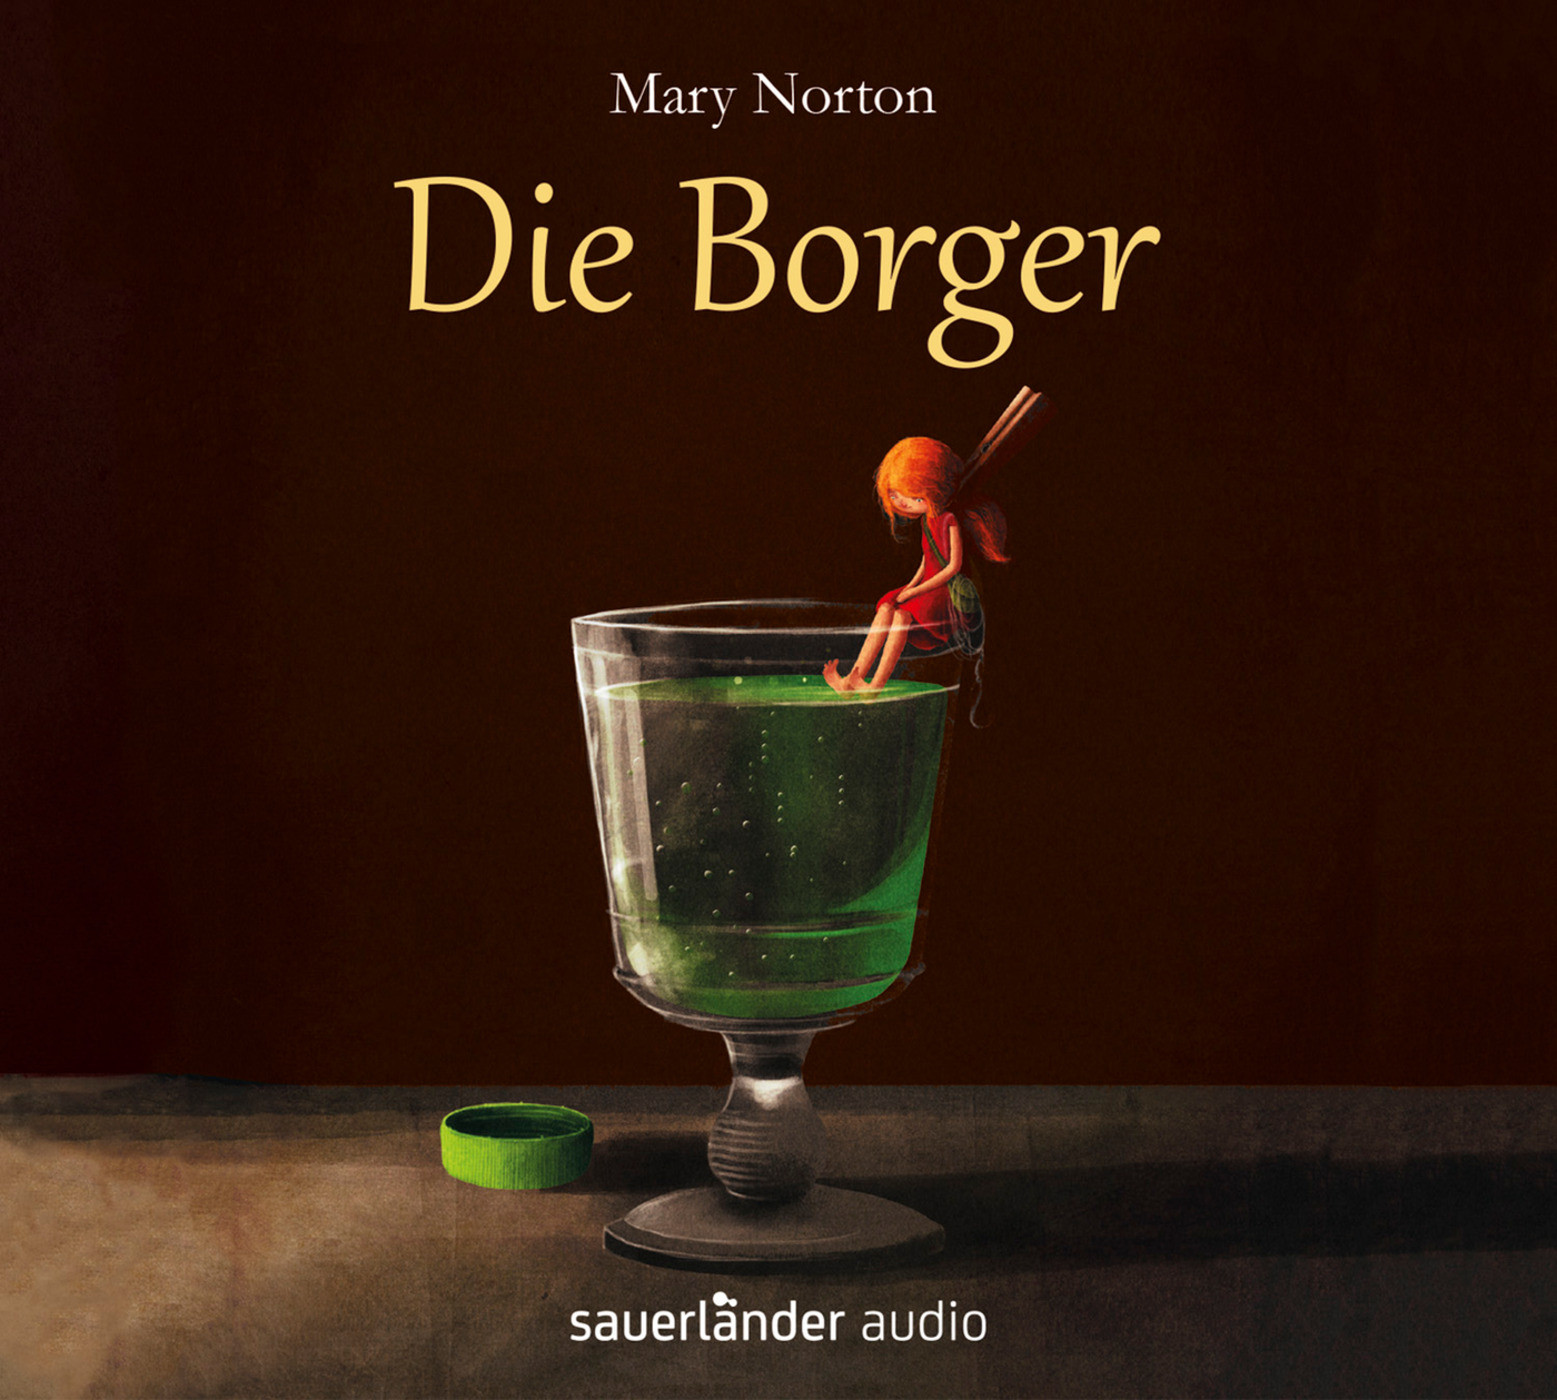 Mary Norton - Die Borger